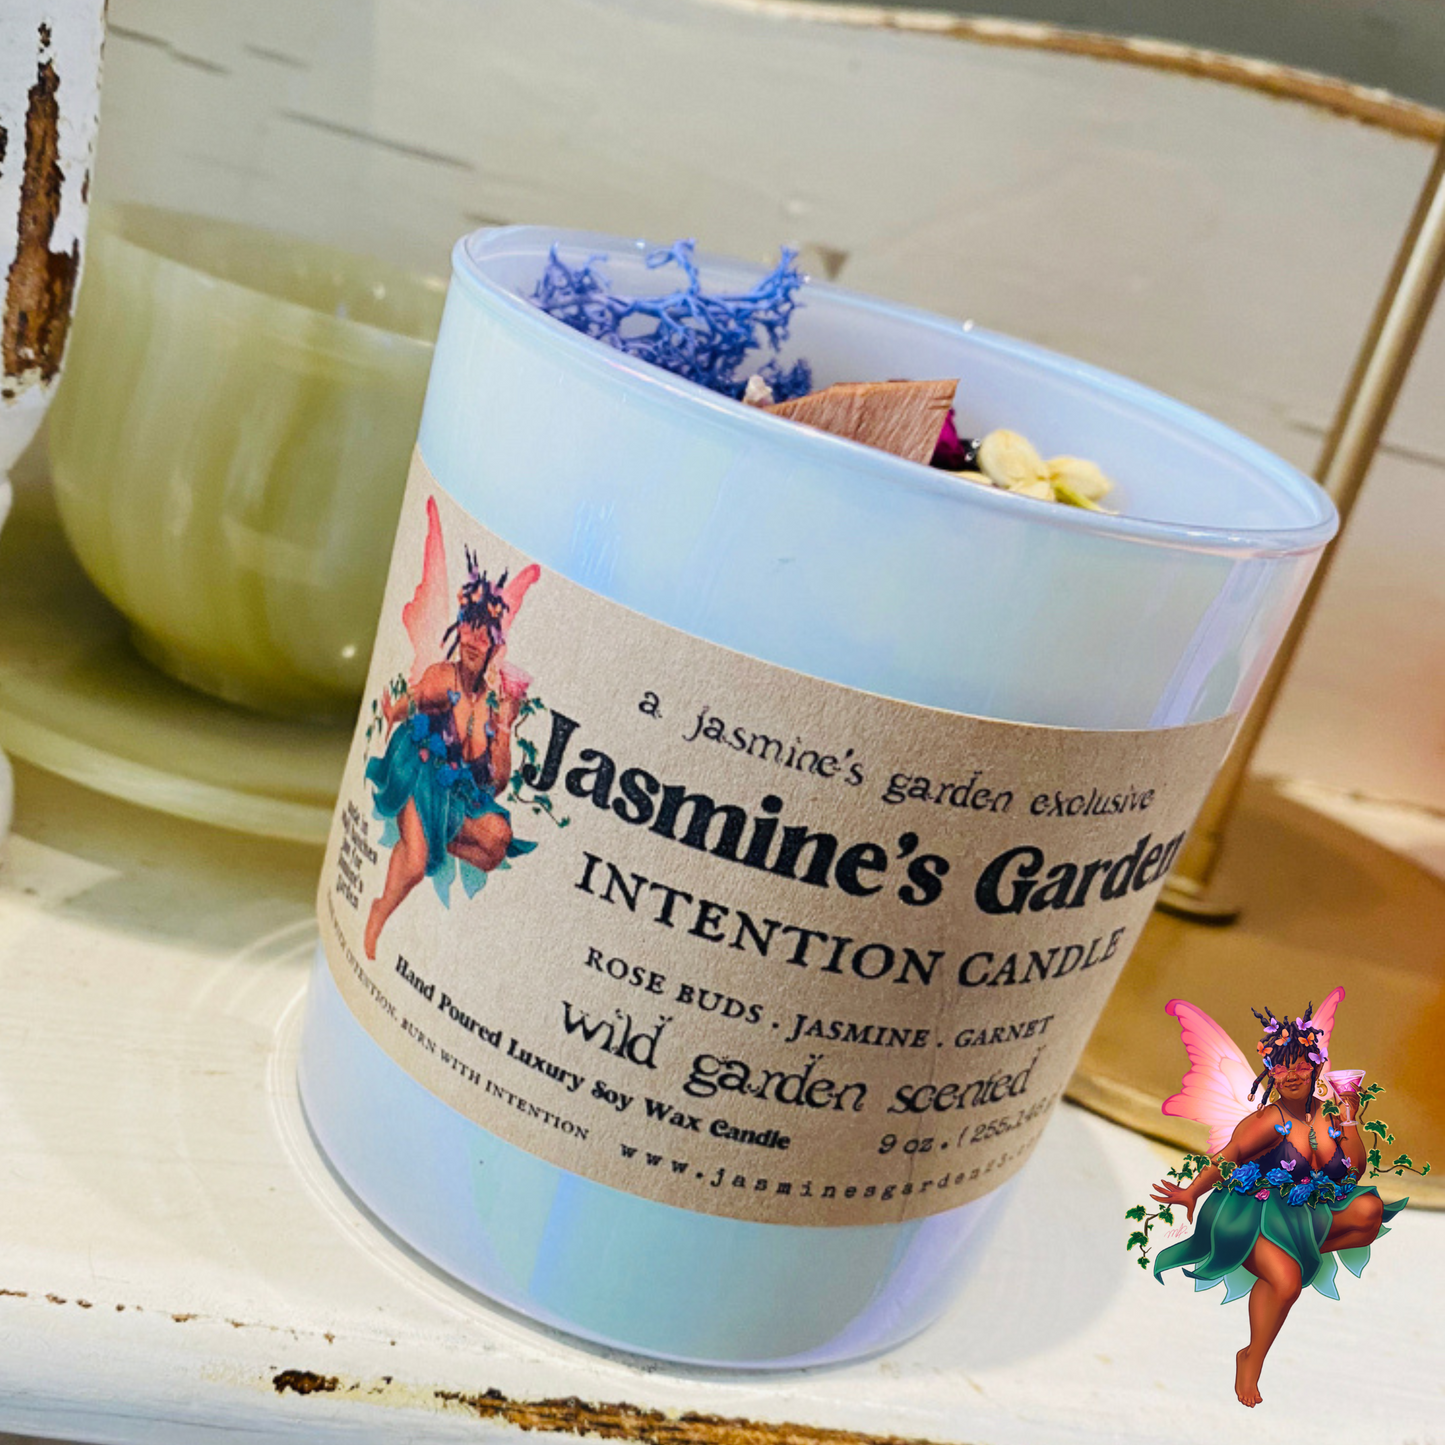 Jasmine's Garden Organic Coconut Soy Wax Intention Candle - 9 oz